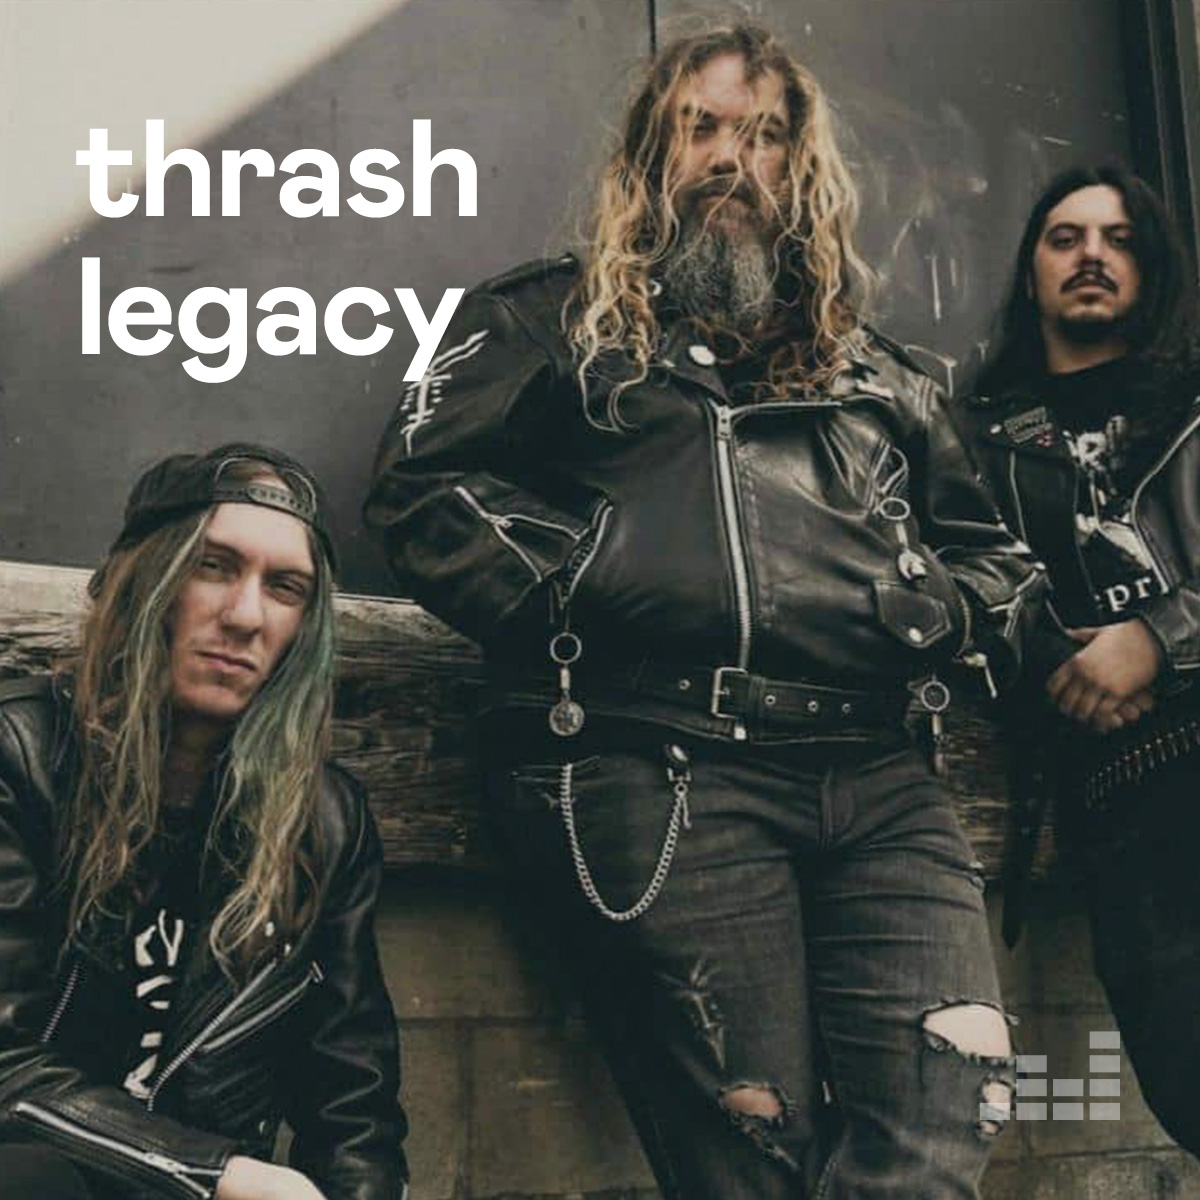 'Drug-O-Cop' is now blasting on @Deezer's Thrash Legacy playlist! 🤘 nblast.de/DeezerThrashLe… #GoAheadAndDie #Metal #Deathcrust #MaxCavalera #IgorCavalera